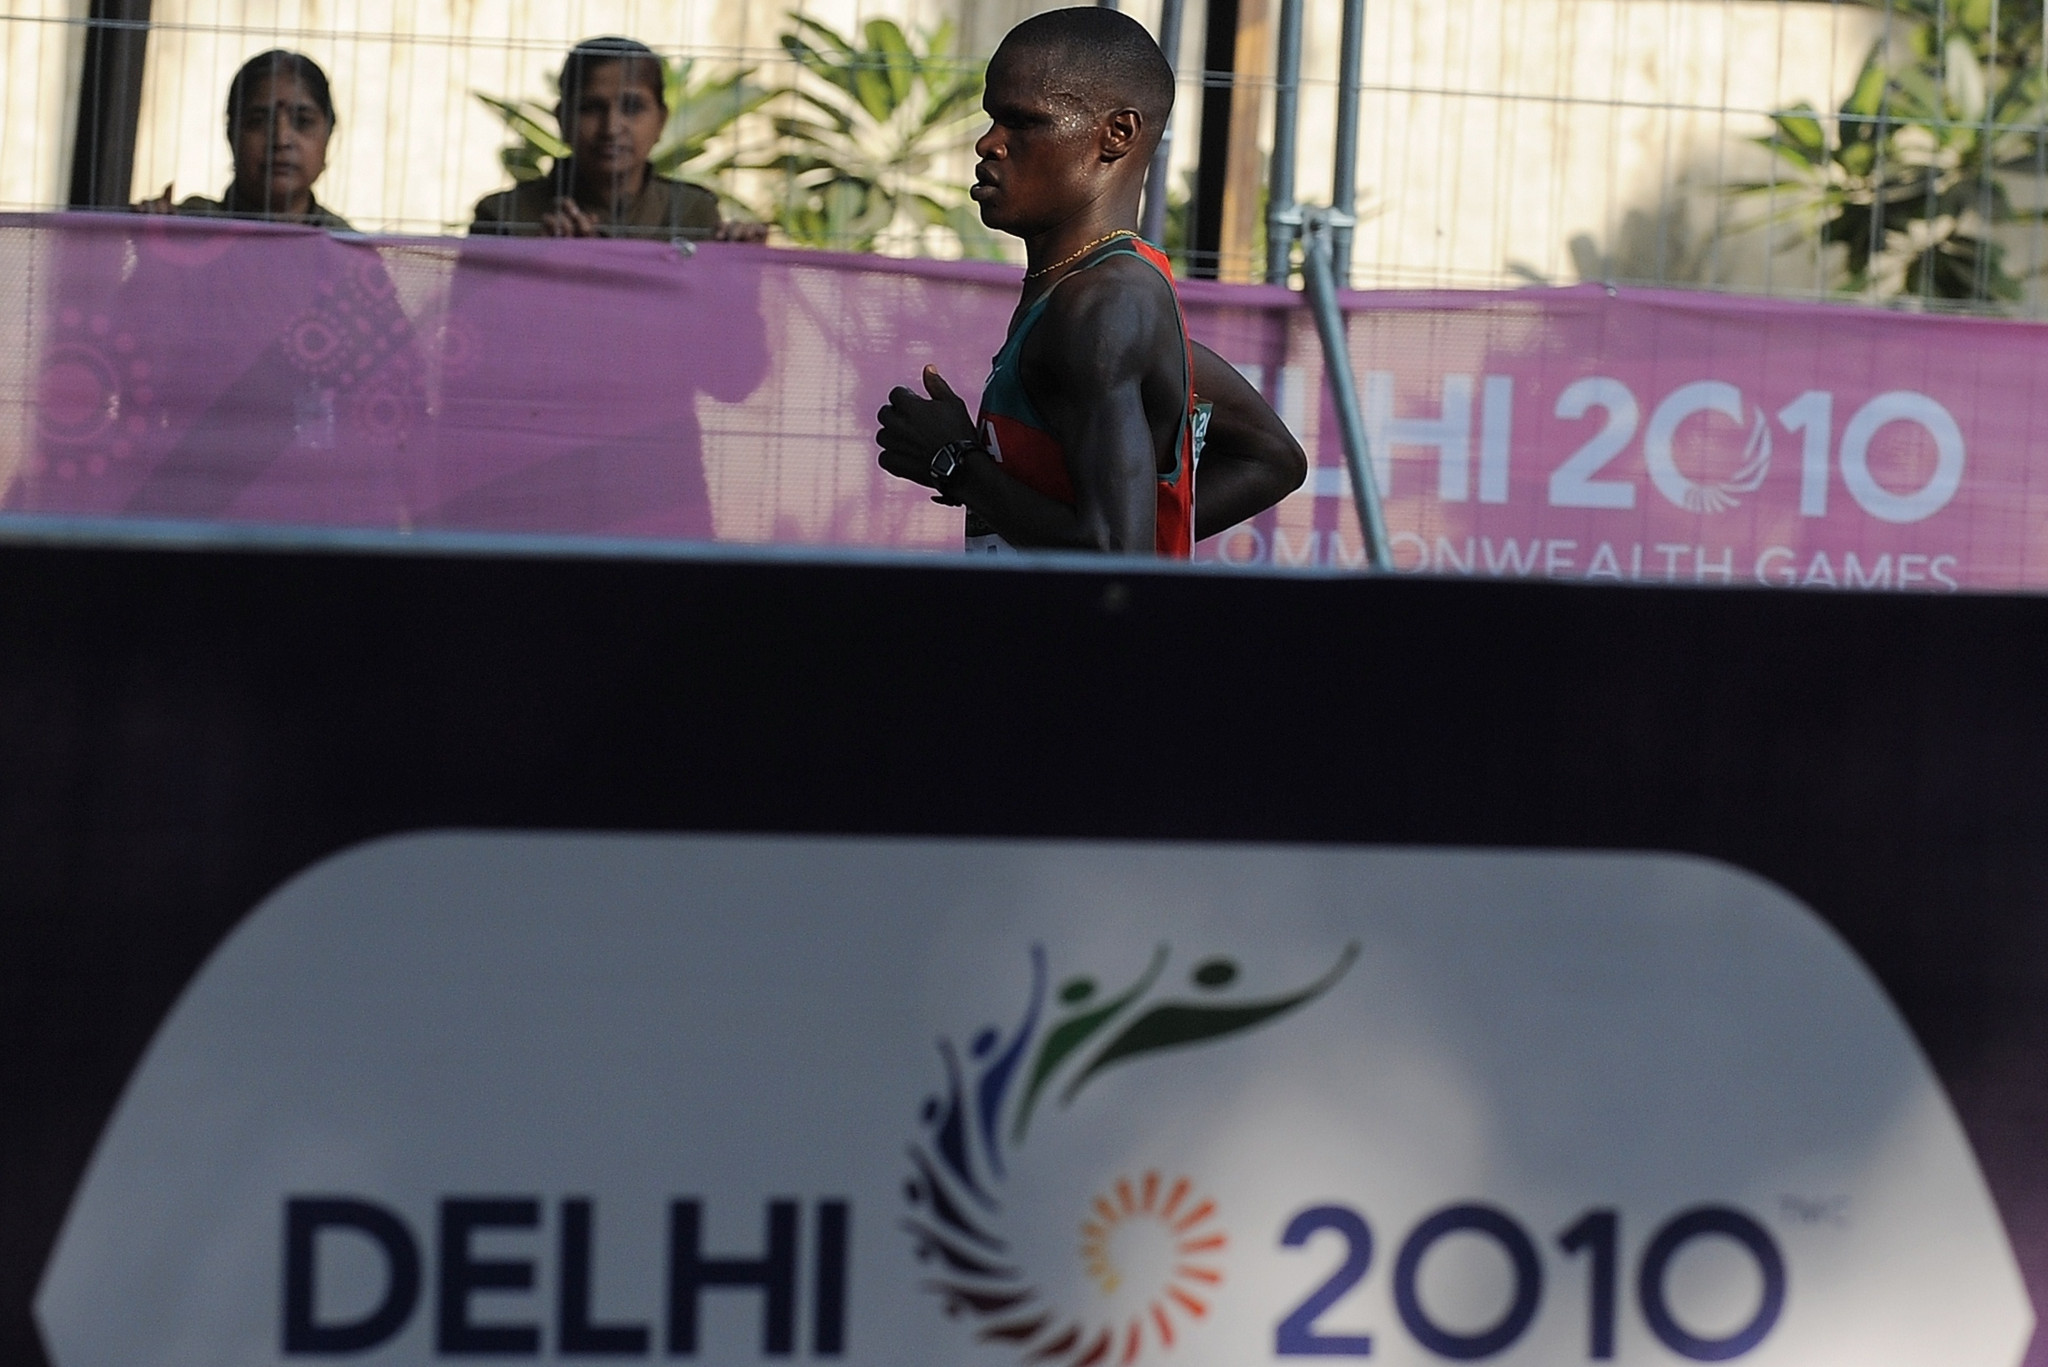  John Kelai was the last Kenyan man to win the Commonwealth Games marathon at Delhi 2010 ©Getty Images